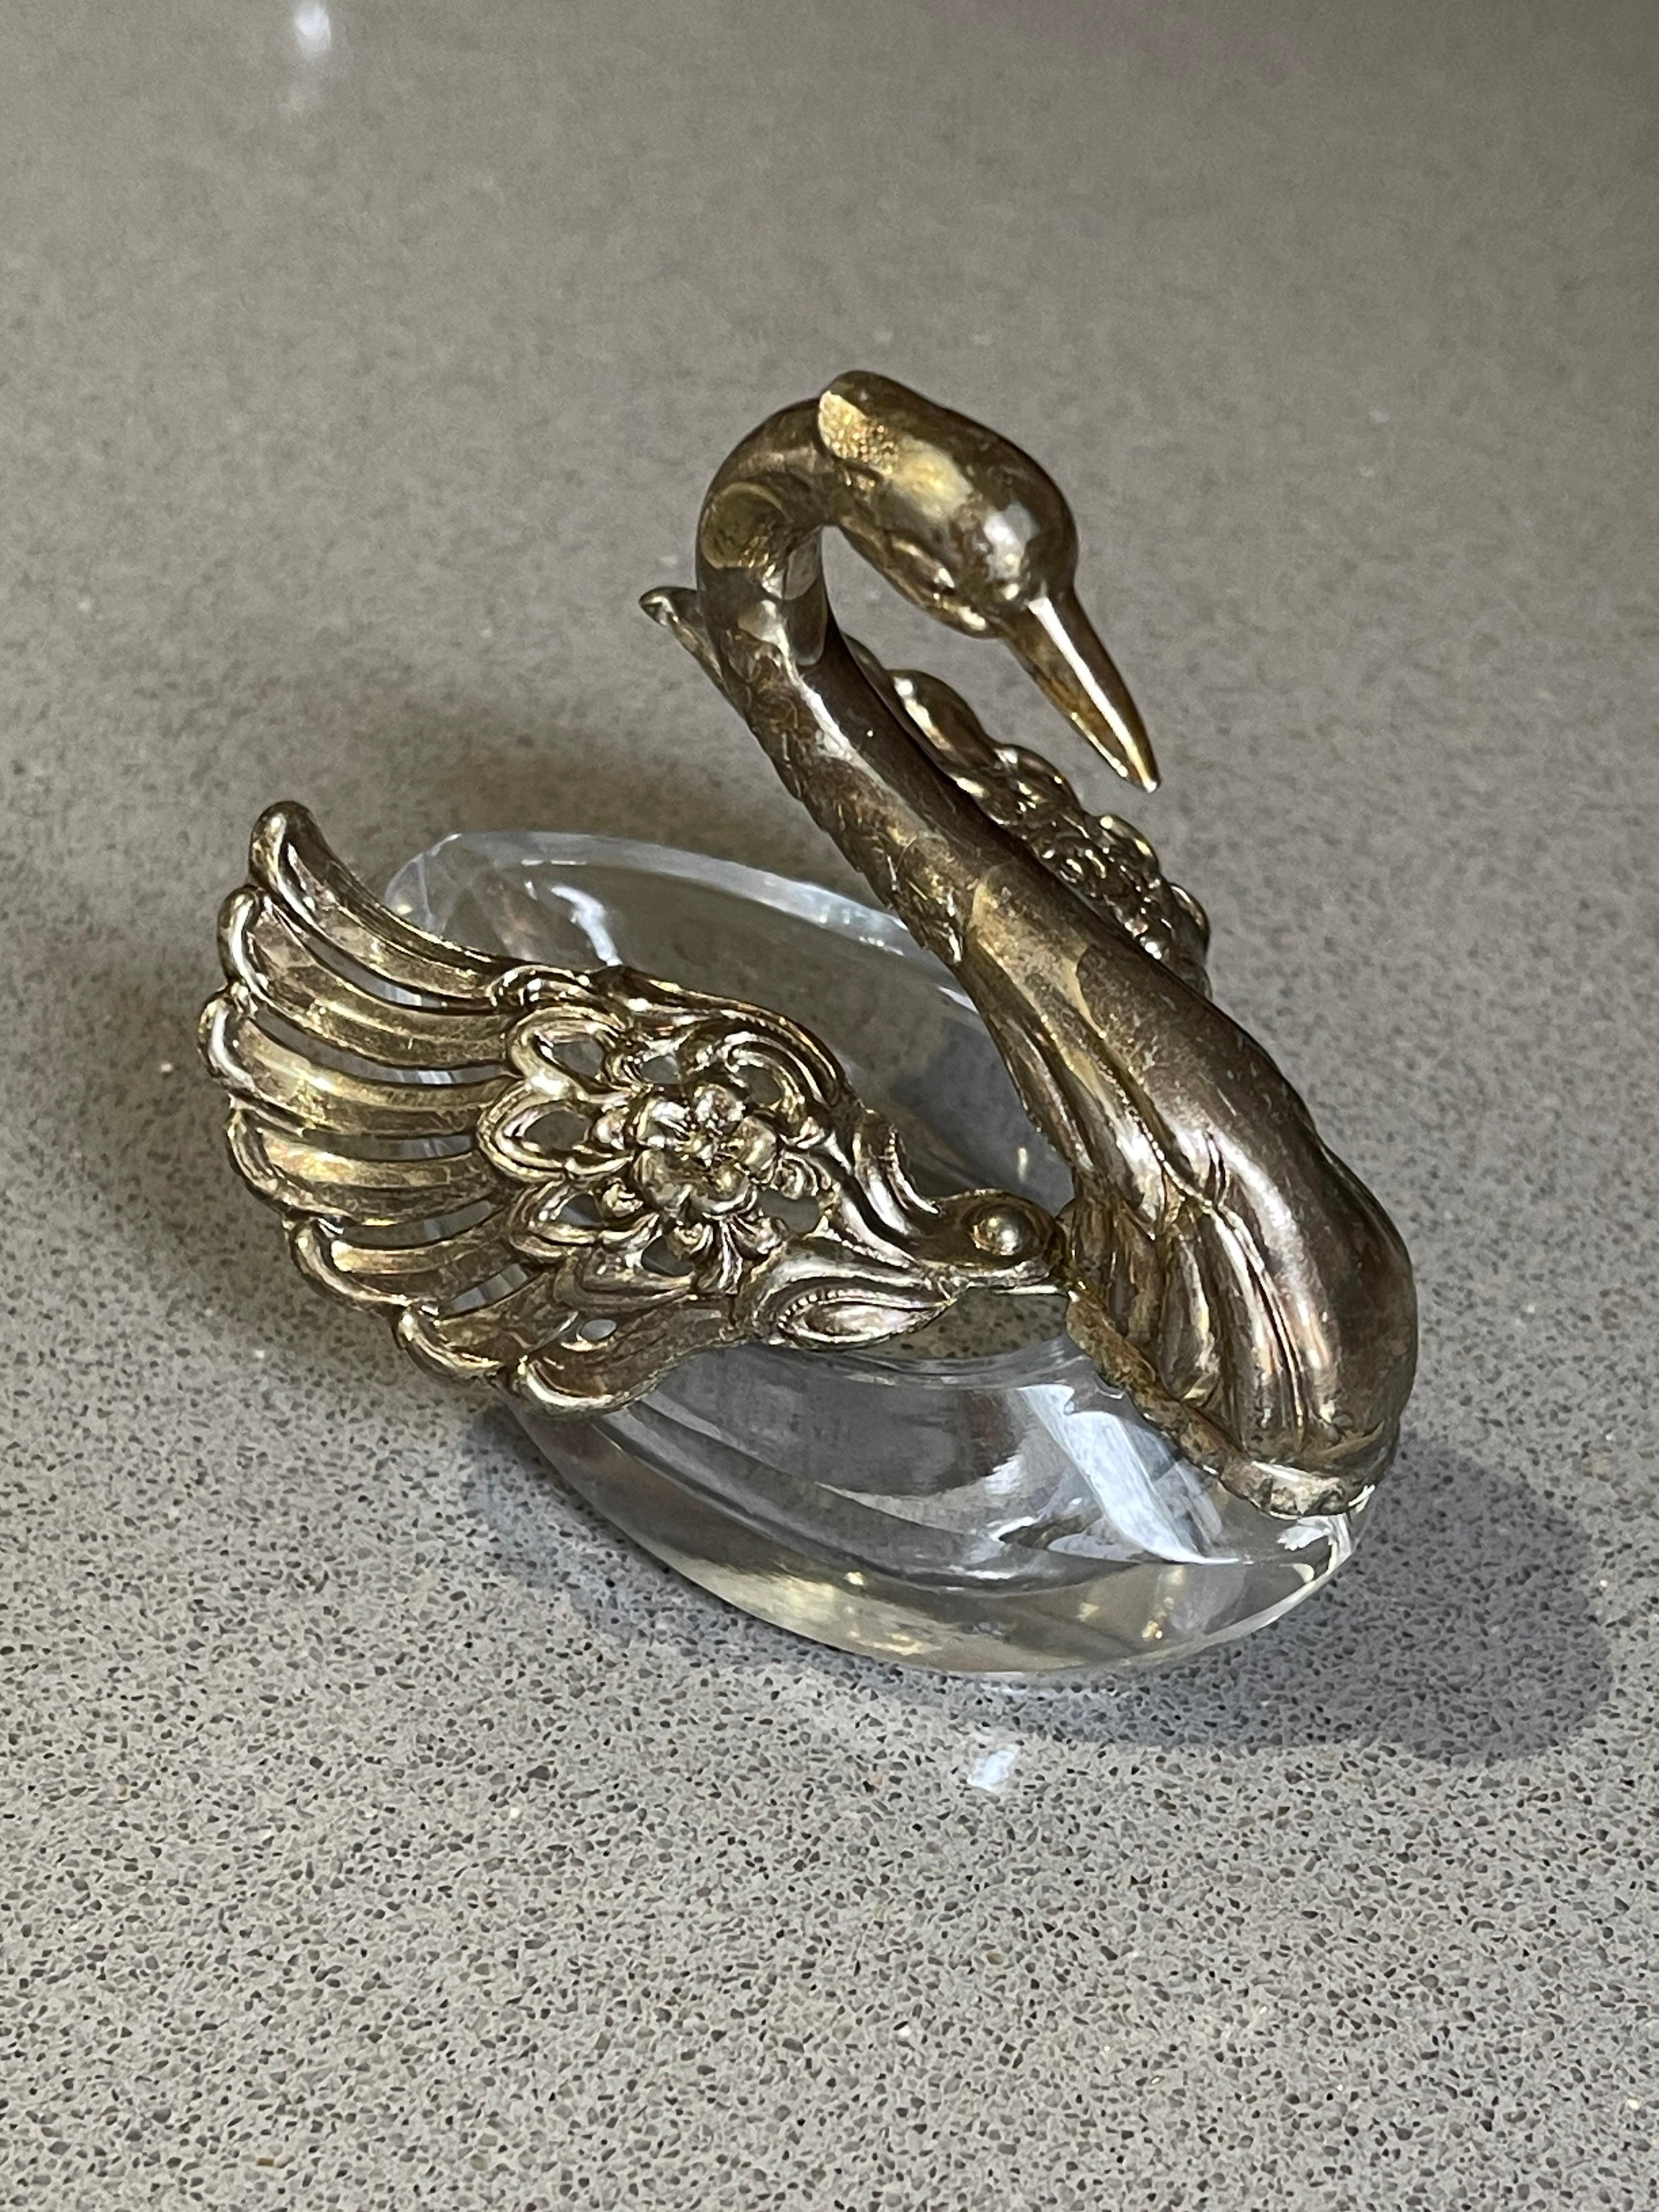 Silver Leaf Silver Salt Shaker, A Pair of Antique Salt Shaker Crystal Swann Moving Wings